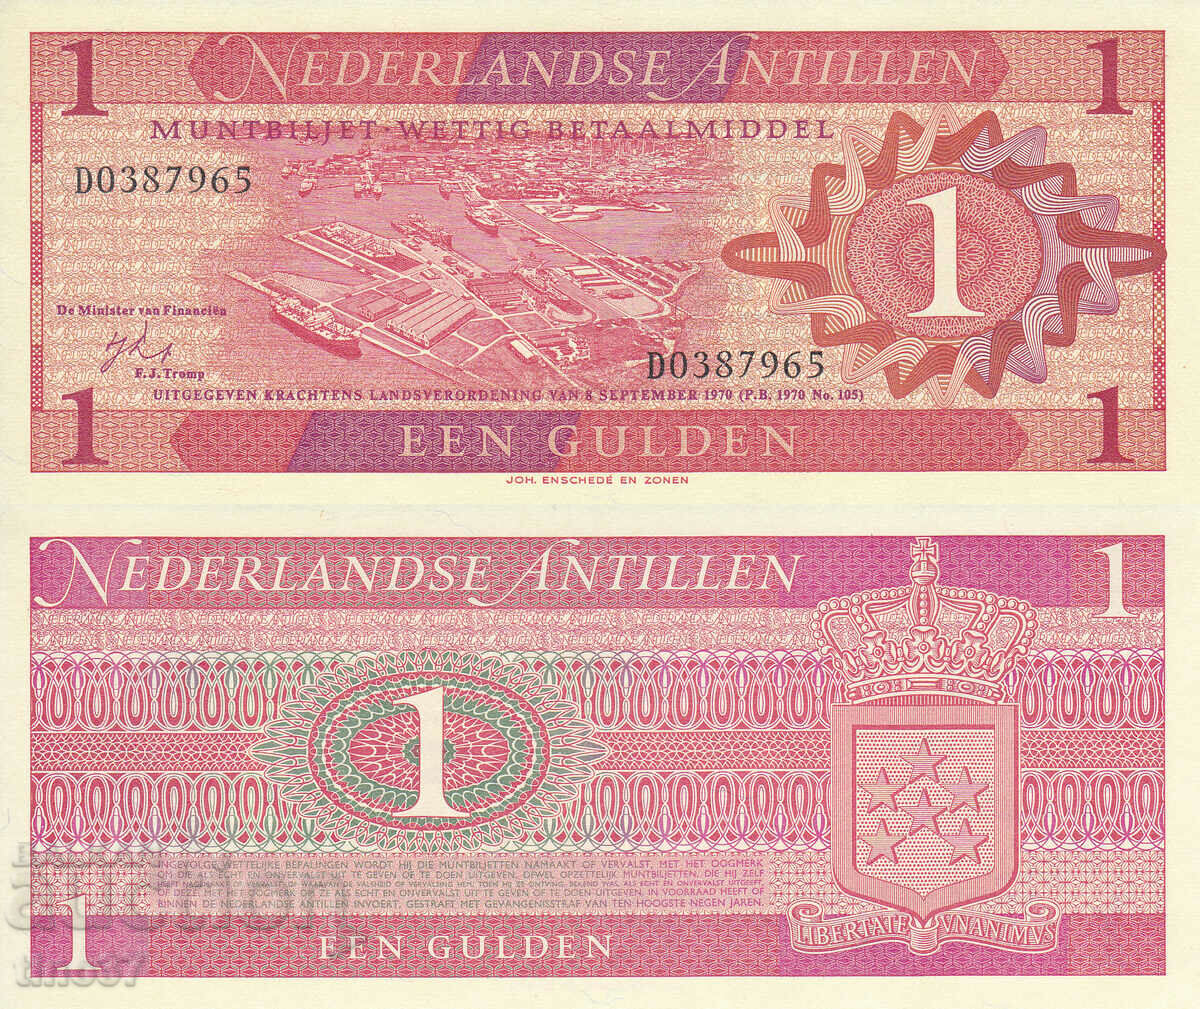 tino37- NETHERLANDS ANTILLES - 1 GULDEN - 1970 - UNC